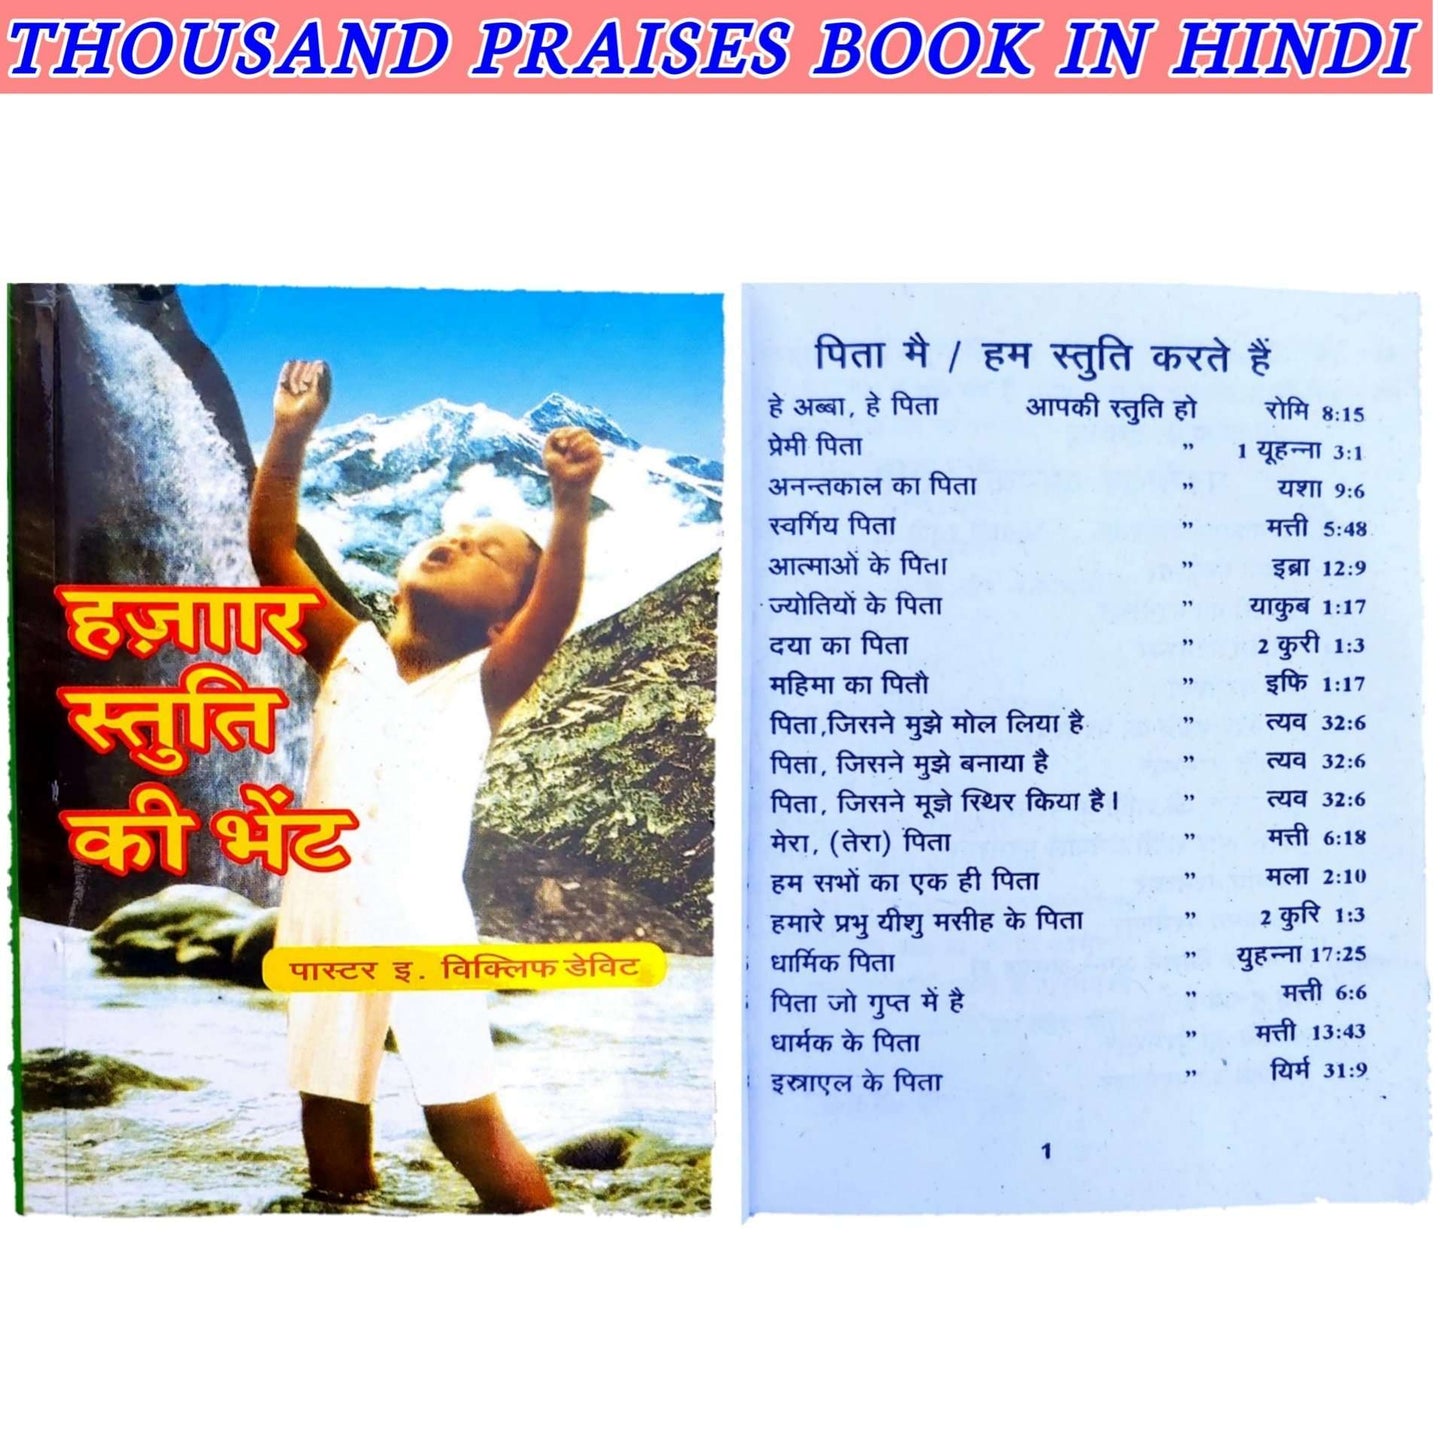 Hindi Thousand Praises Book Pack Of : 10